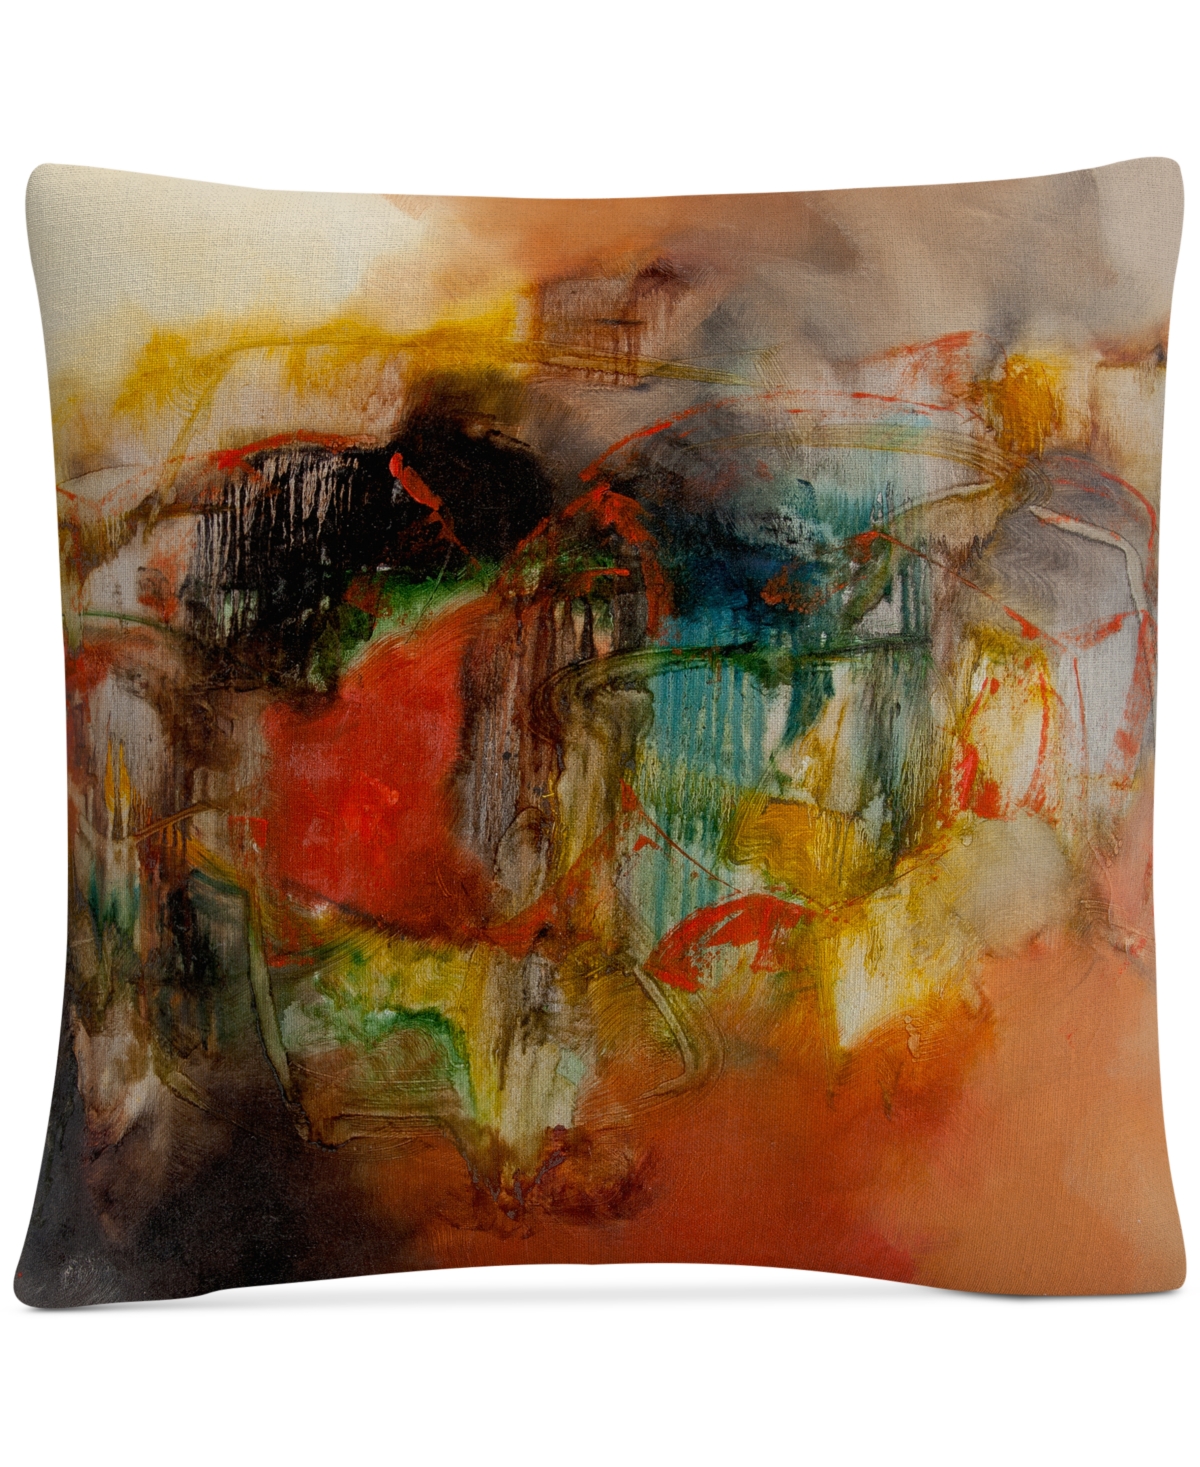 Zavaleta Abstract VIDecorative Pillow, 16 x 16